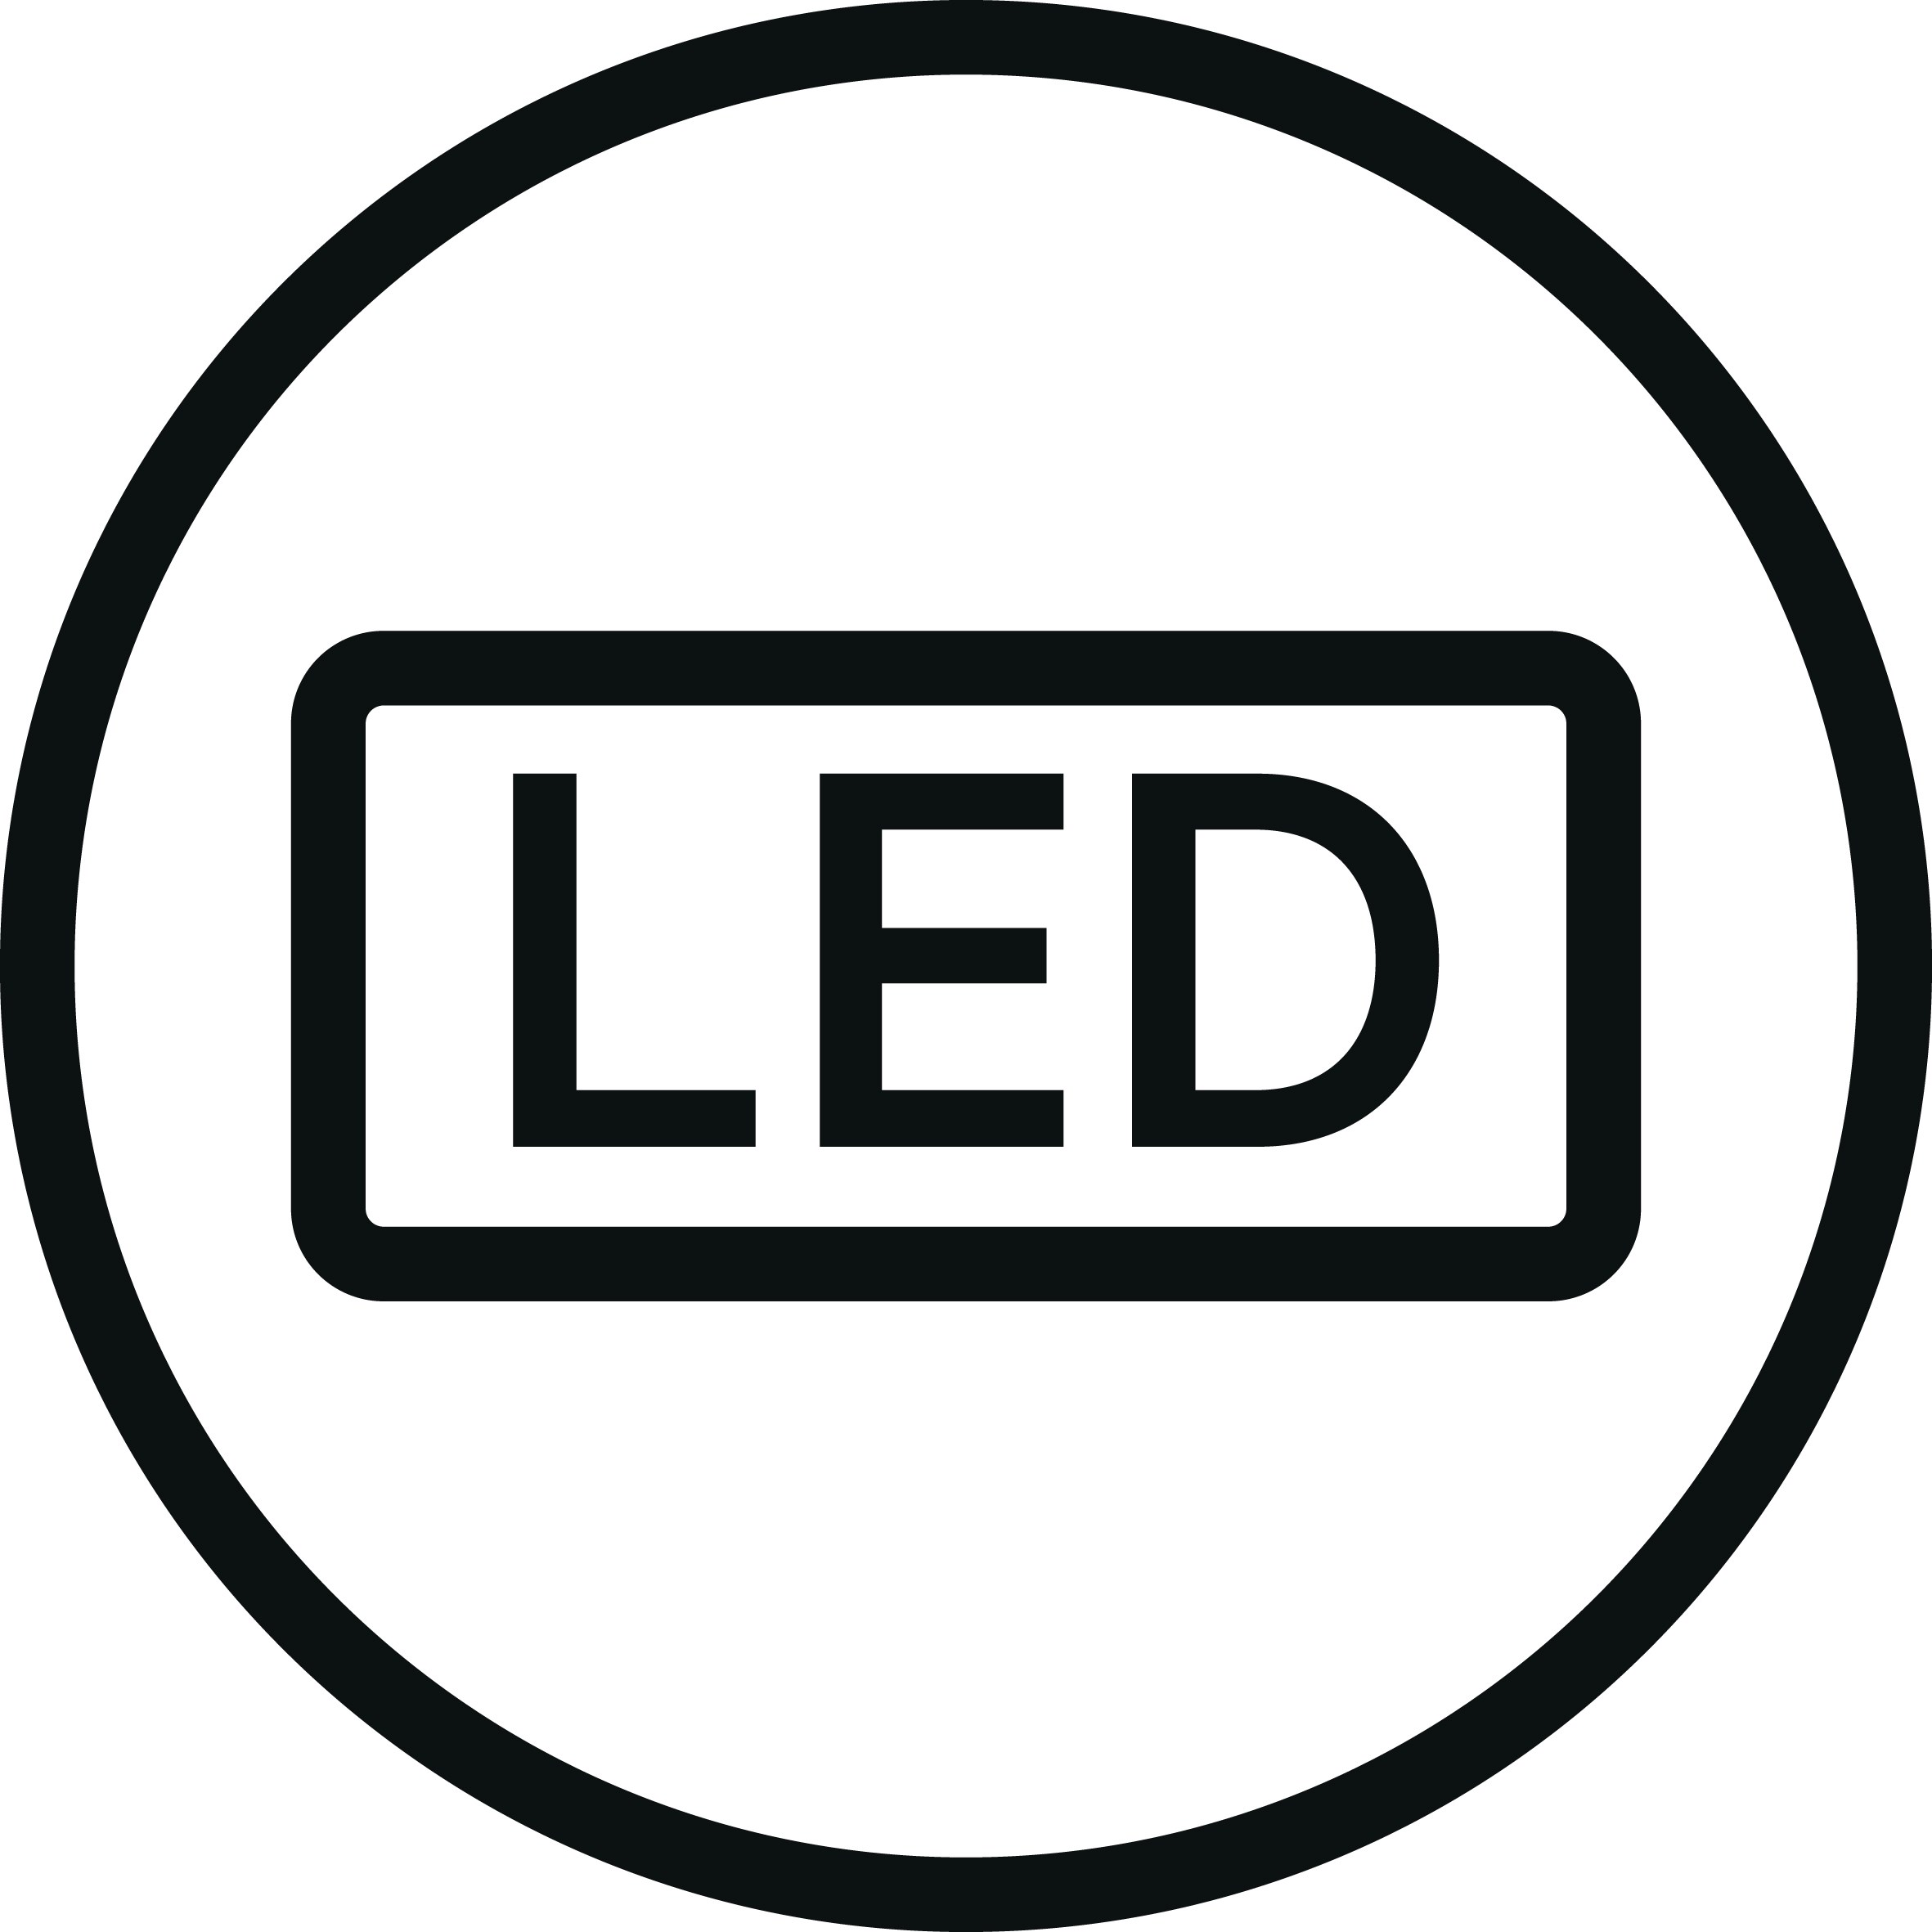 LED_Display-PSAAAP16PC569017.jpg